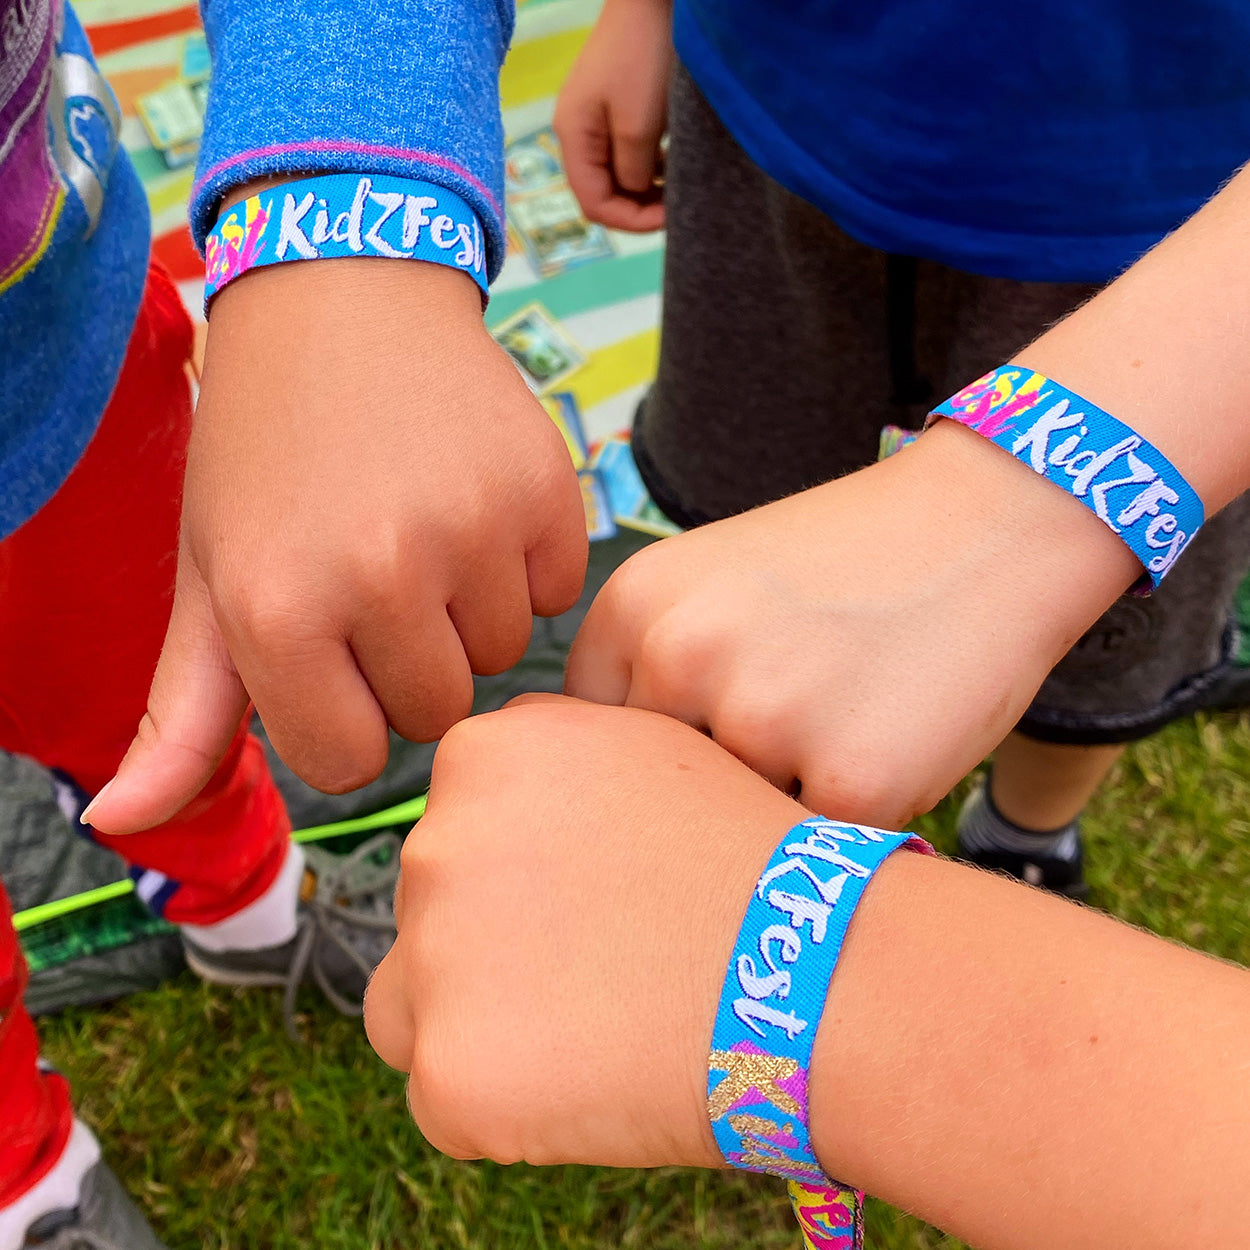 KIDZFEST KIDS Festival Party Wristbands